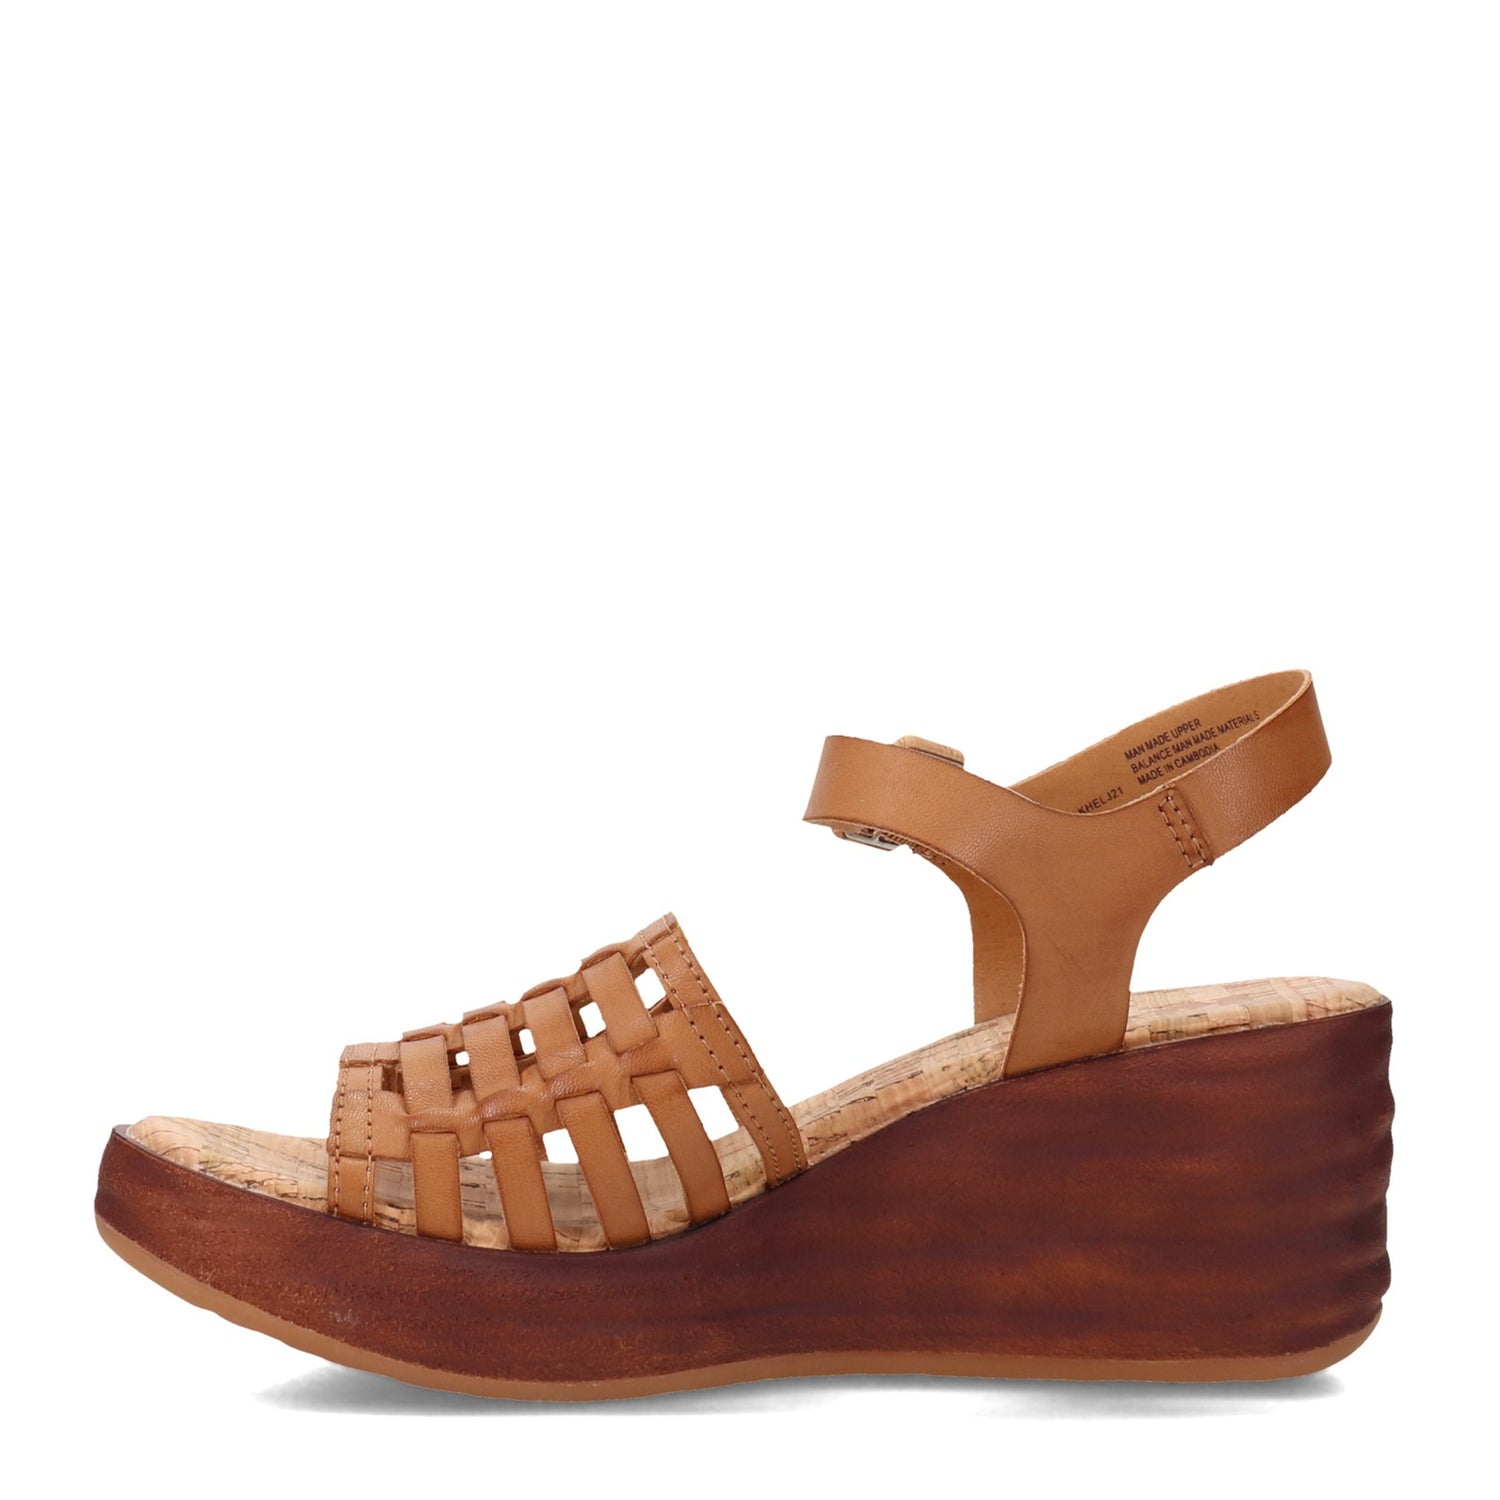 Peltz Shoes  Women's KORKS Marley Sandal Tan KR0011416